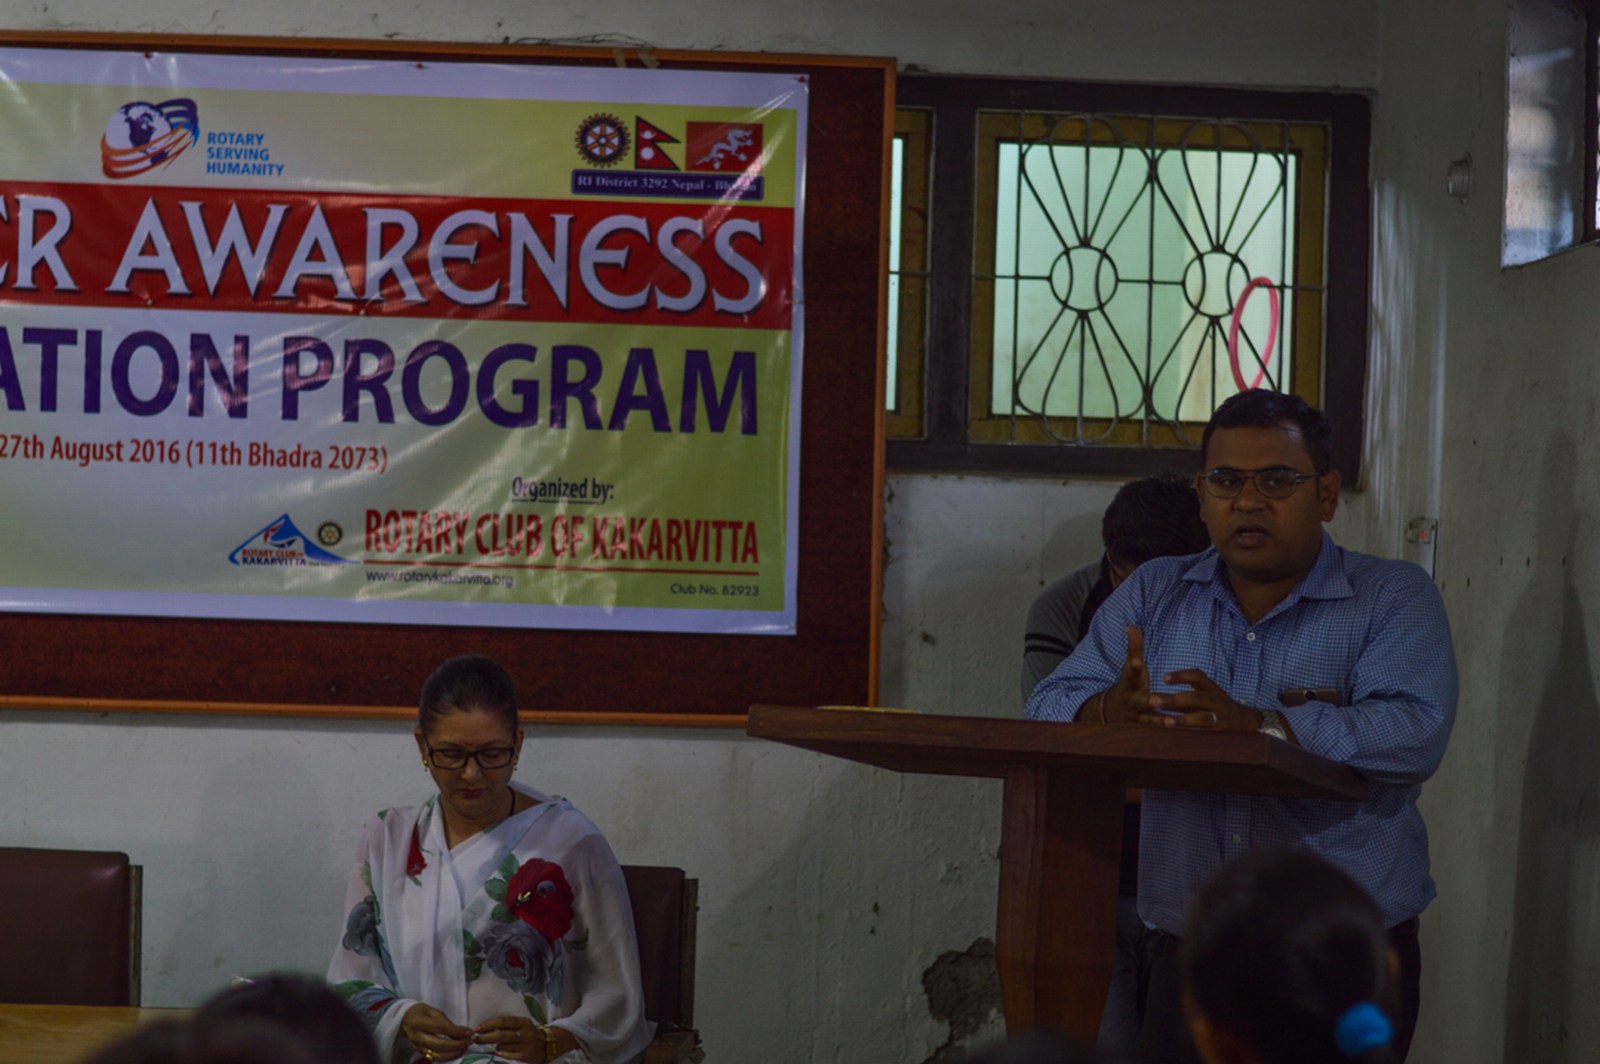 Cancer-Awareness-Orientation-Program-2016-Rotary-Club-of-Kakarvitta-29